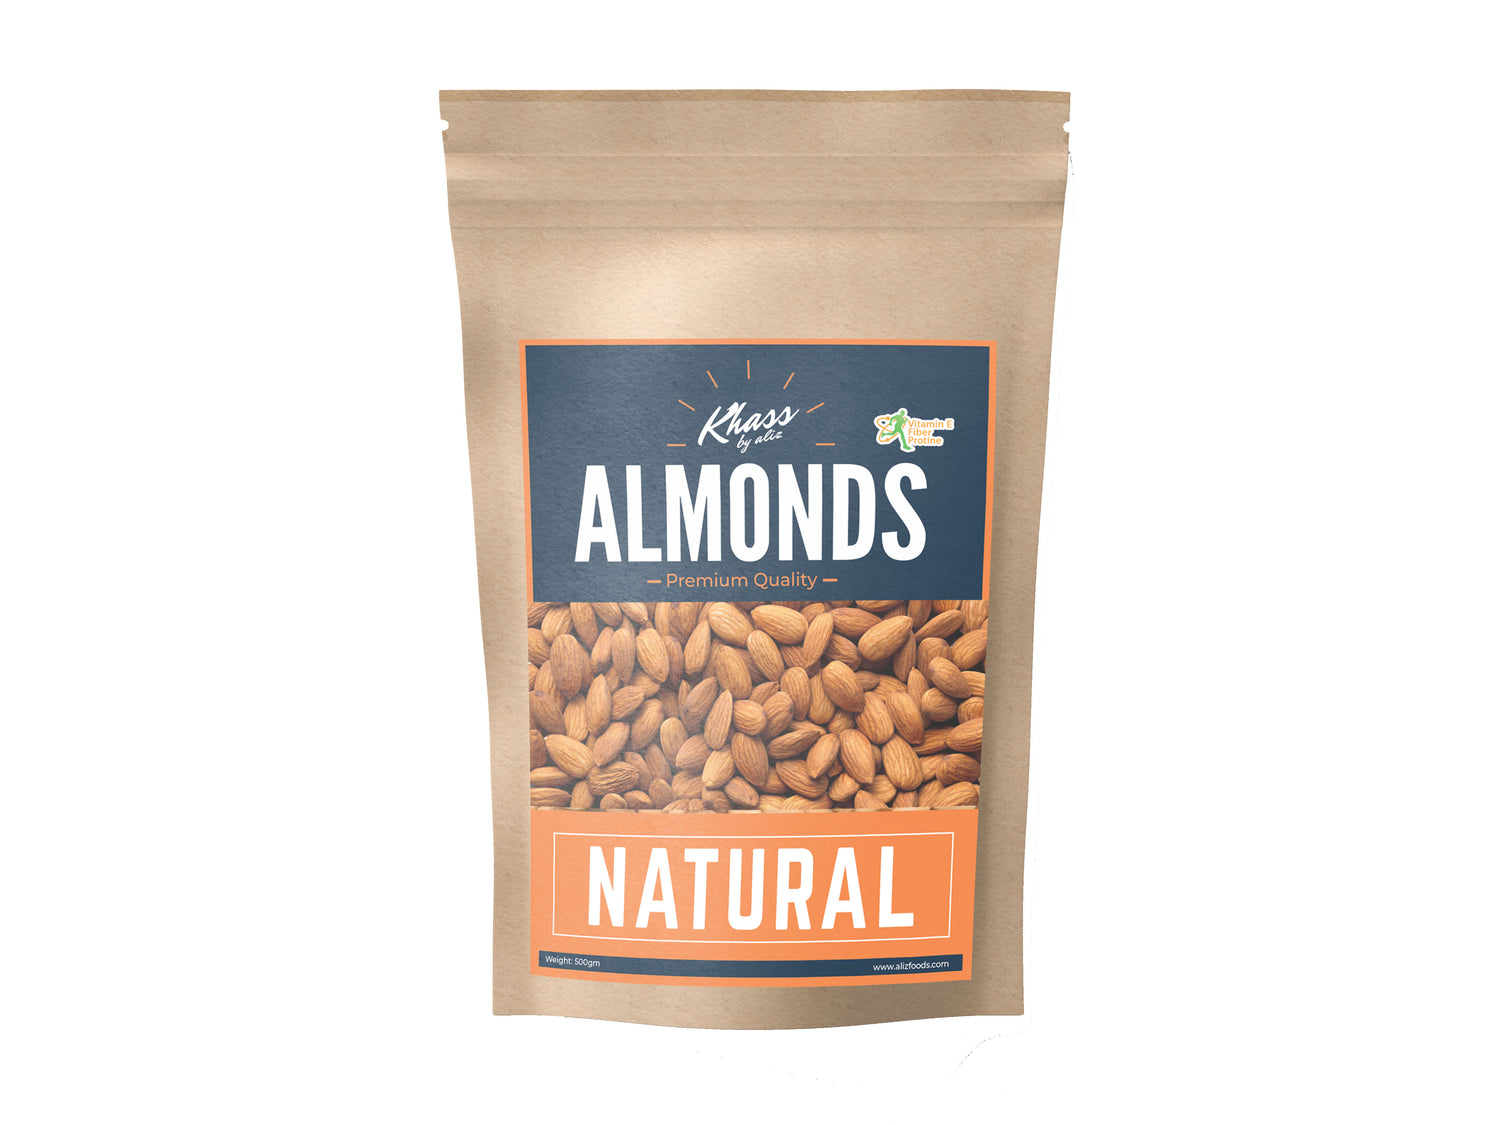 Almonds Badam Price in Pakistan